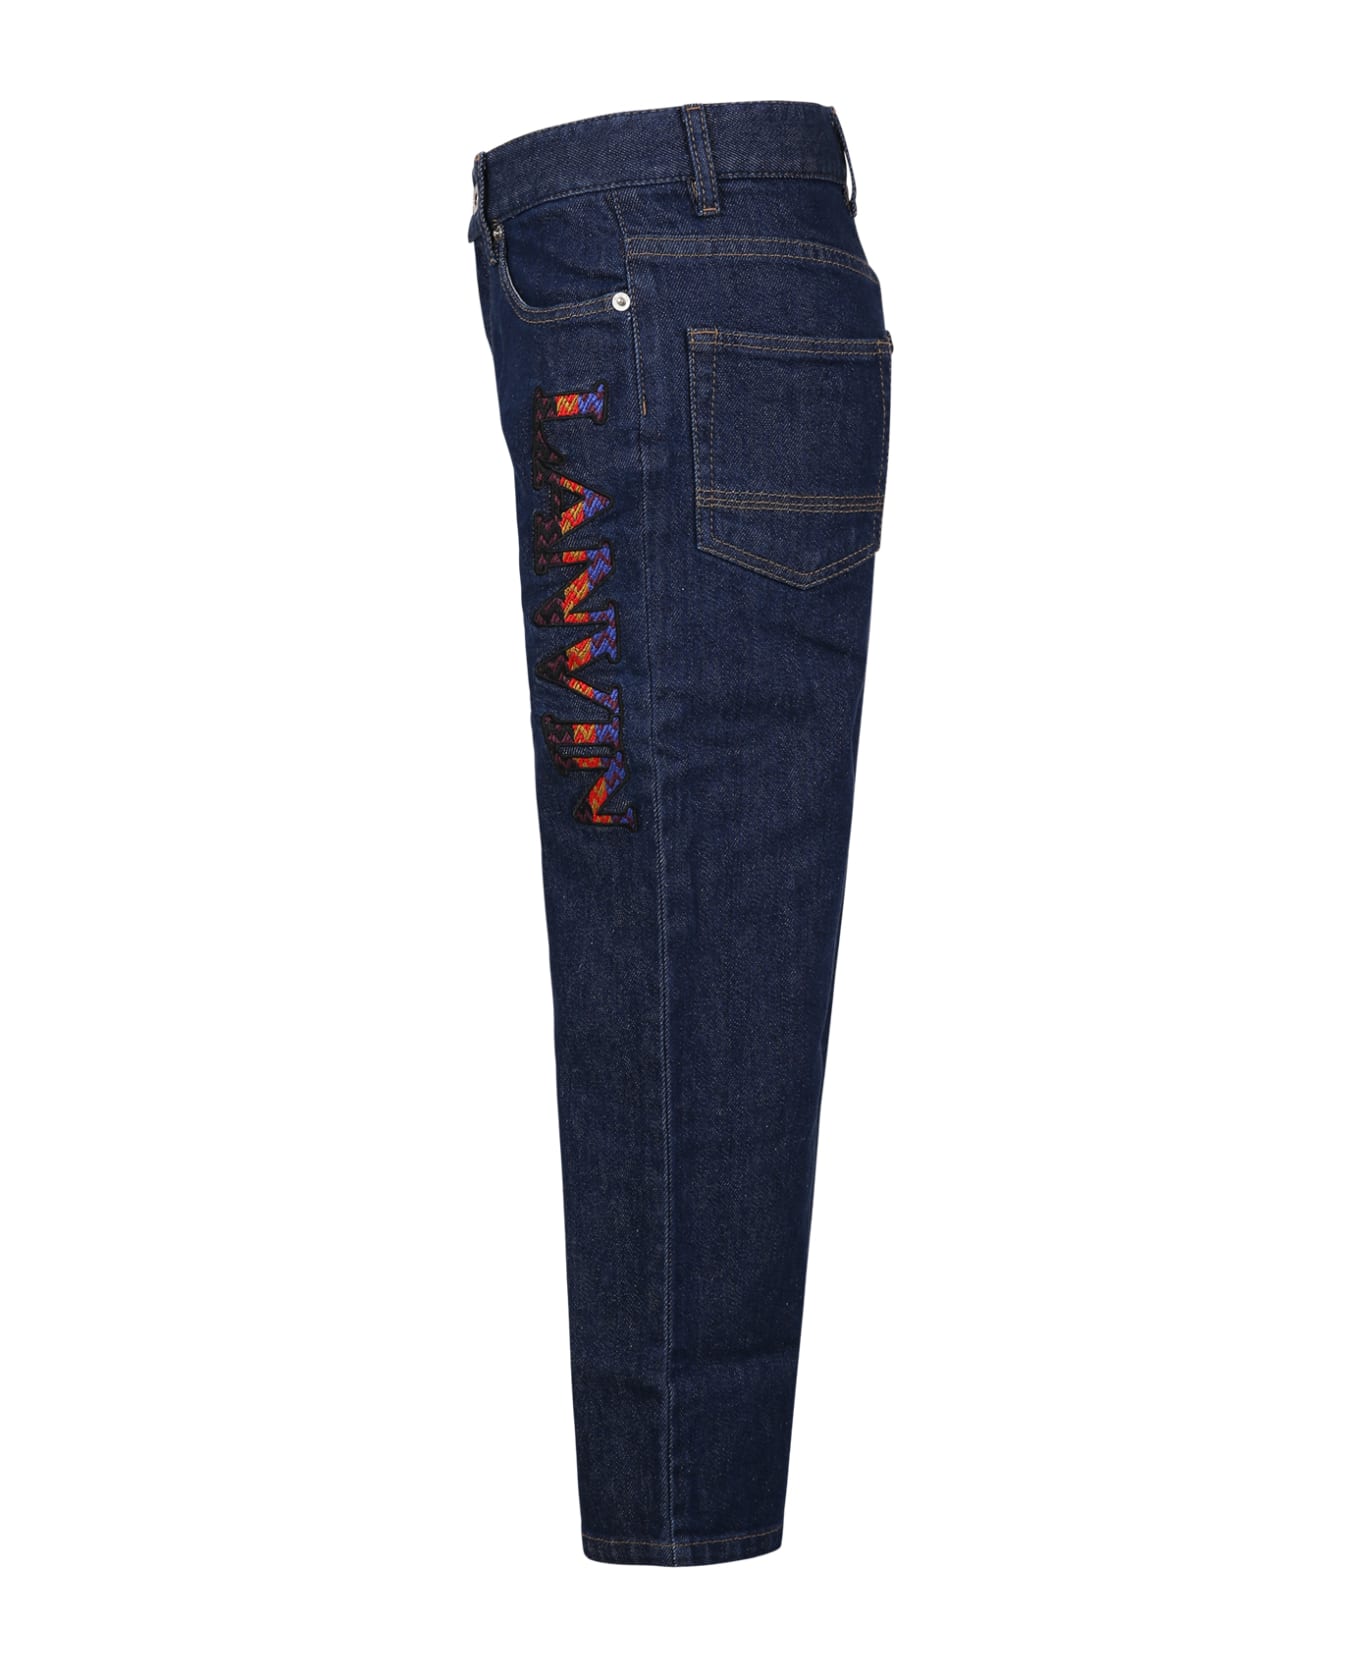 Lanvin Light-blue Jeans For Boy With Embroidered Logo - Denim